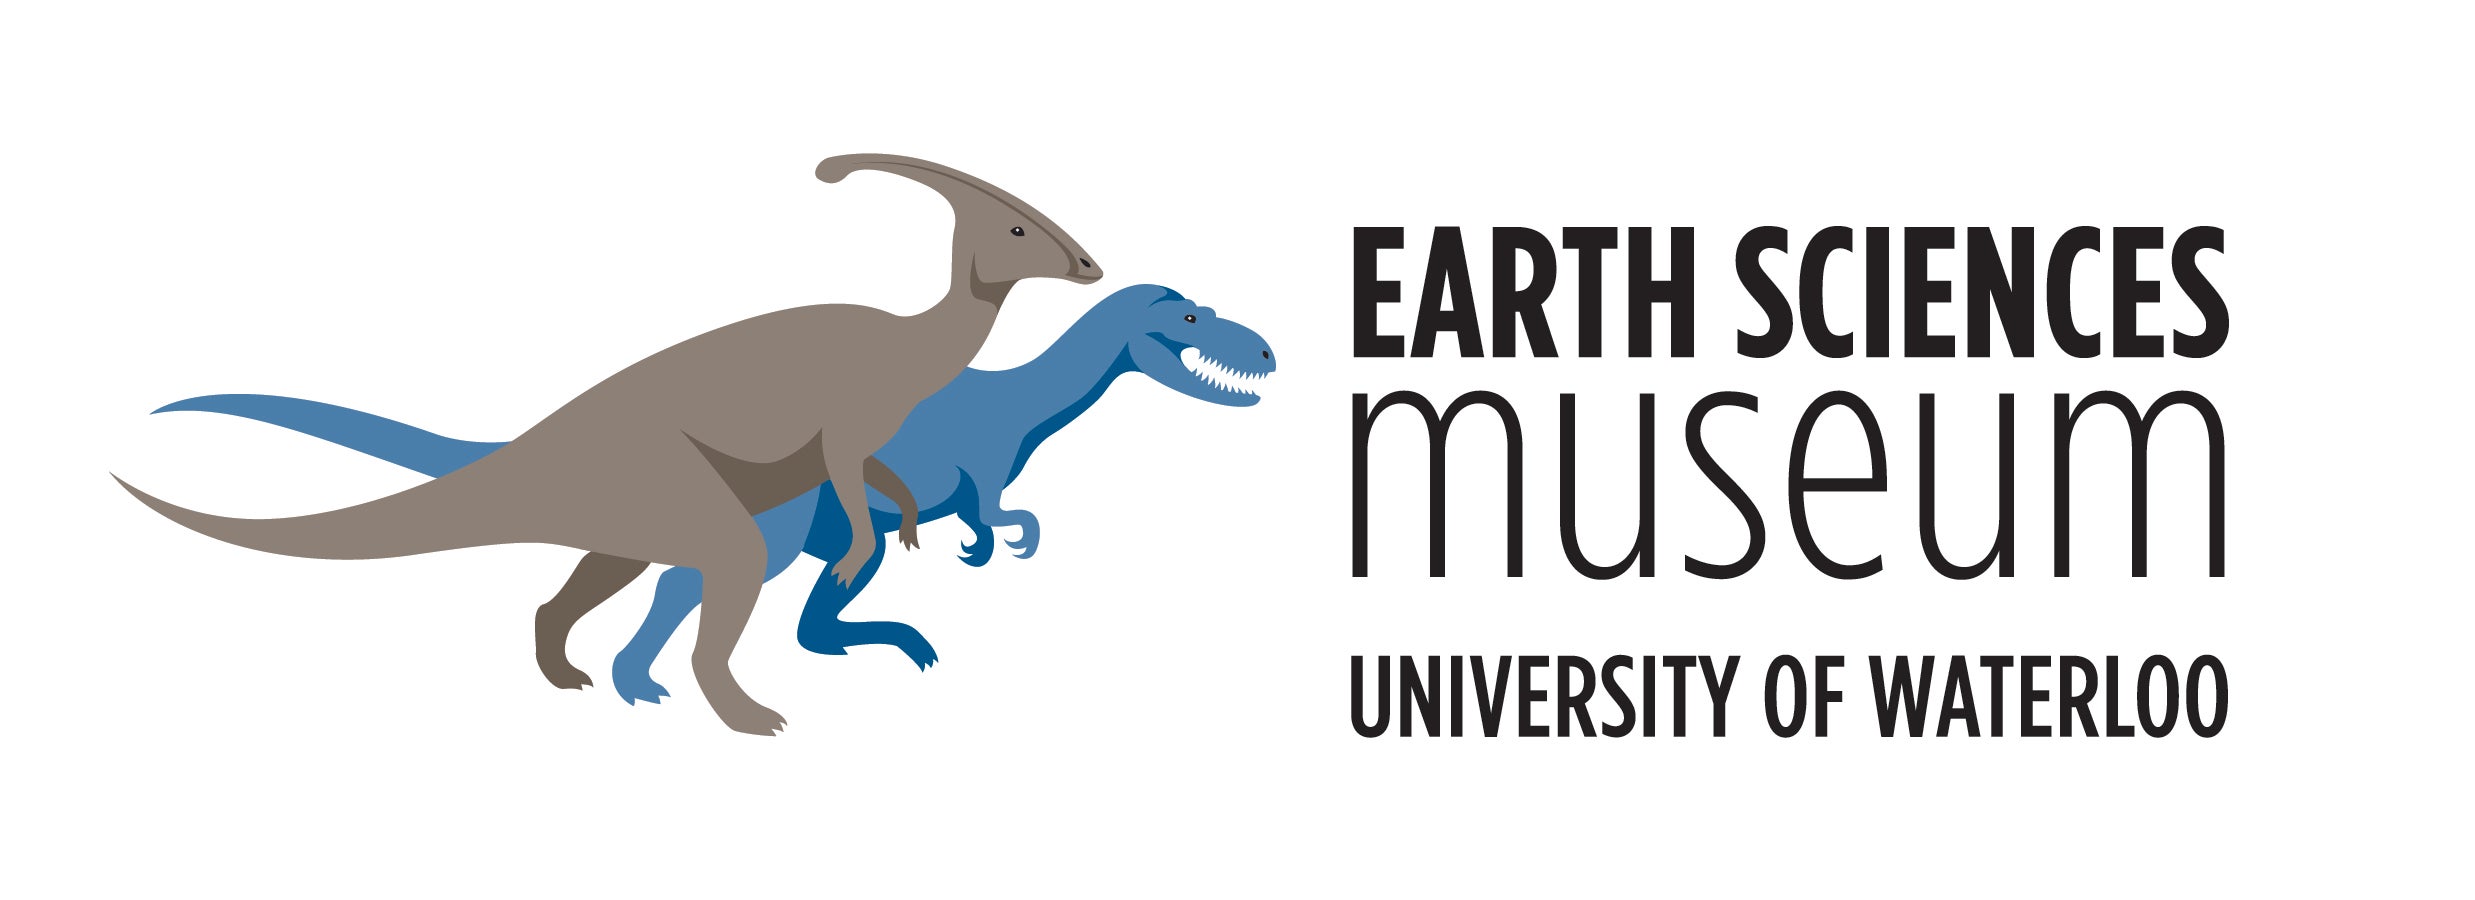 Earth Sciences Museum logo.